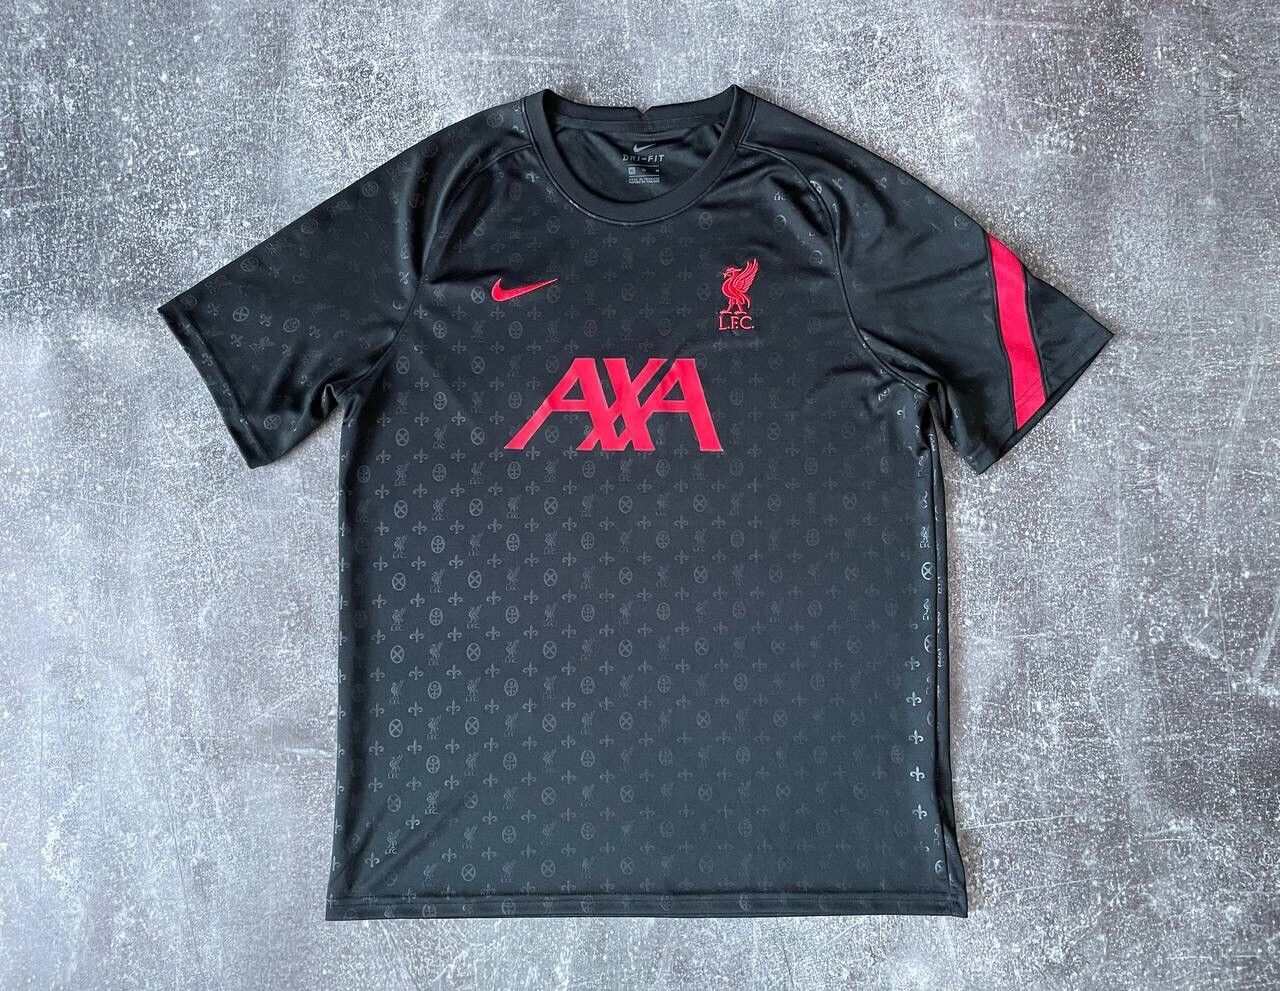 Nike Nike Liverpool FC 21/22 AXA Training Soccer Jersey T-shirt | Grailed